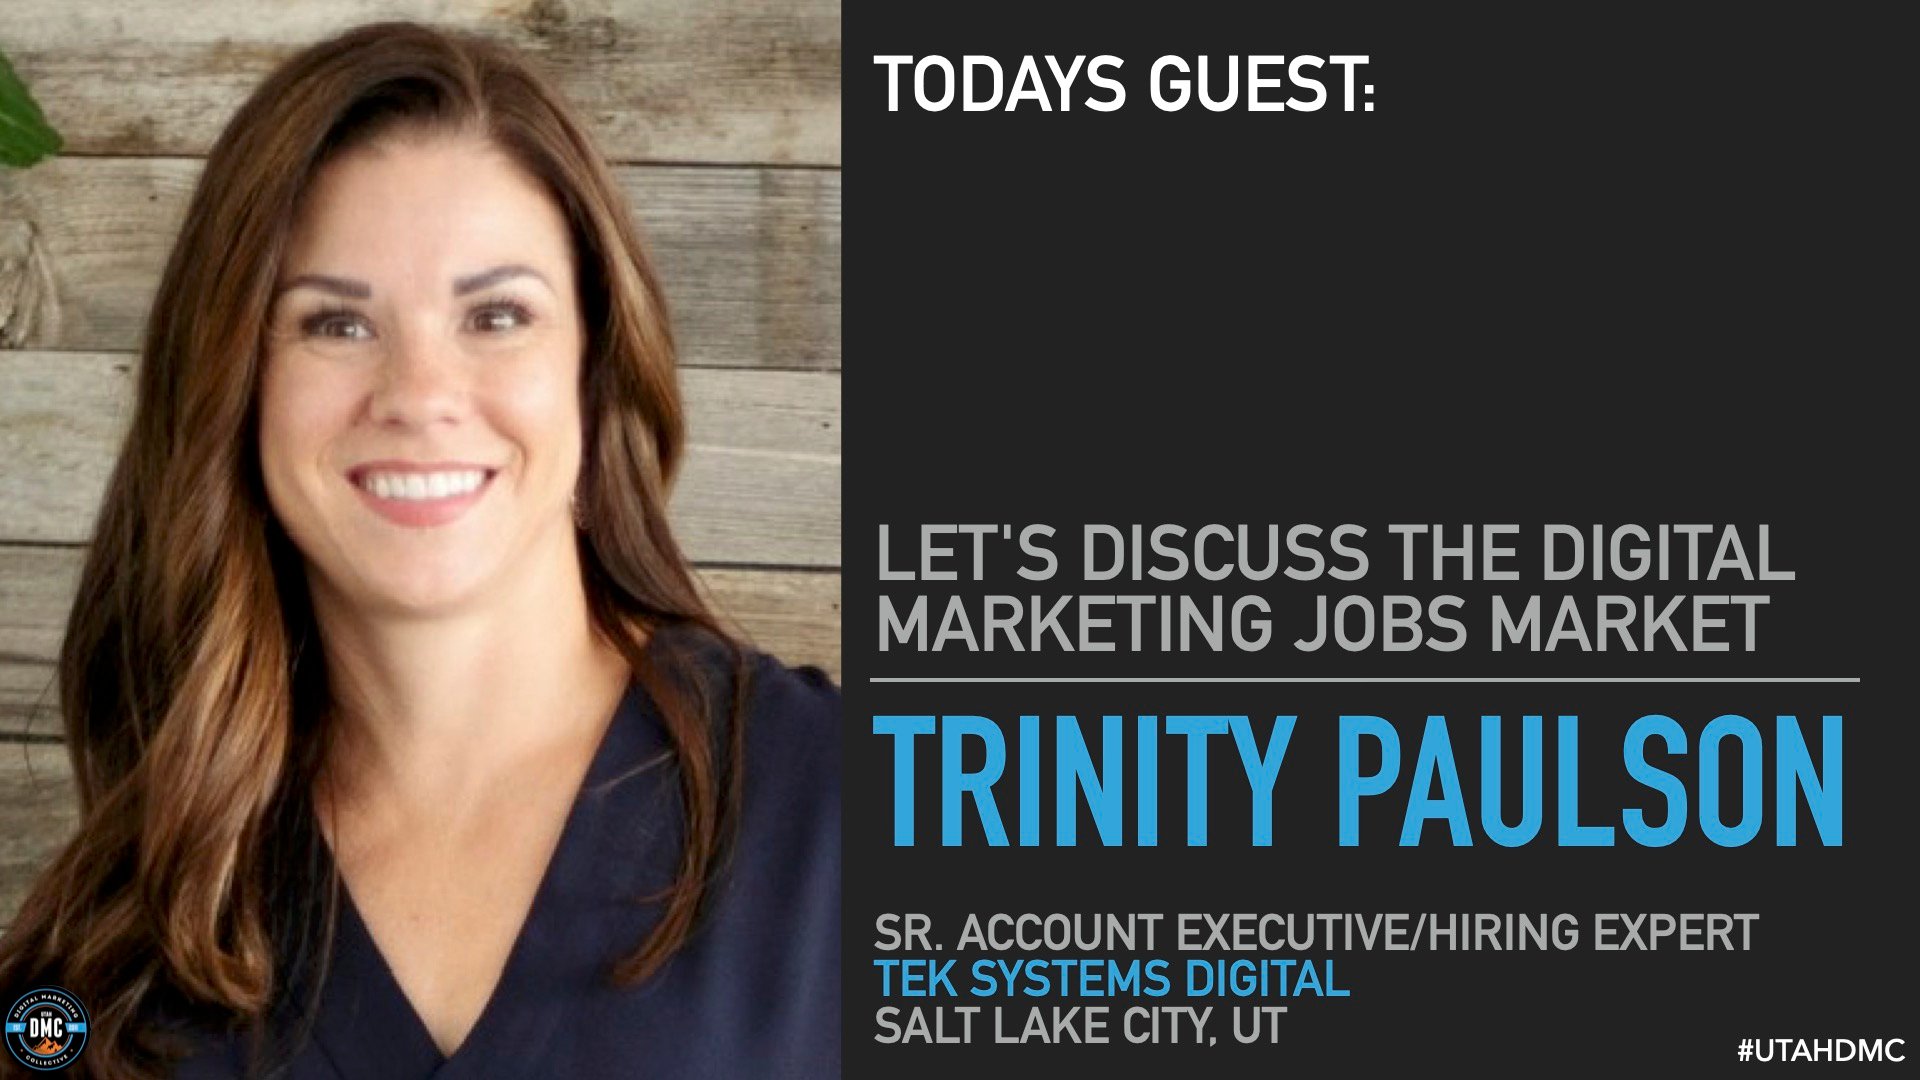 Utah DMC - Let’s Discuss the Digital Jobs Market with Trinity Paulson